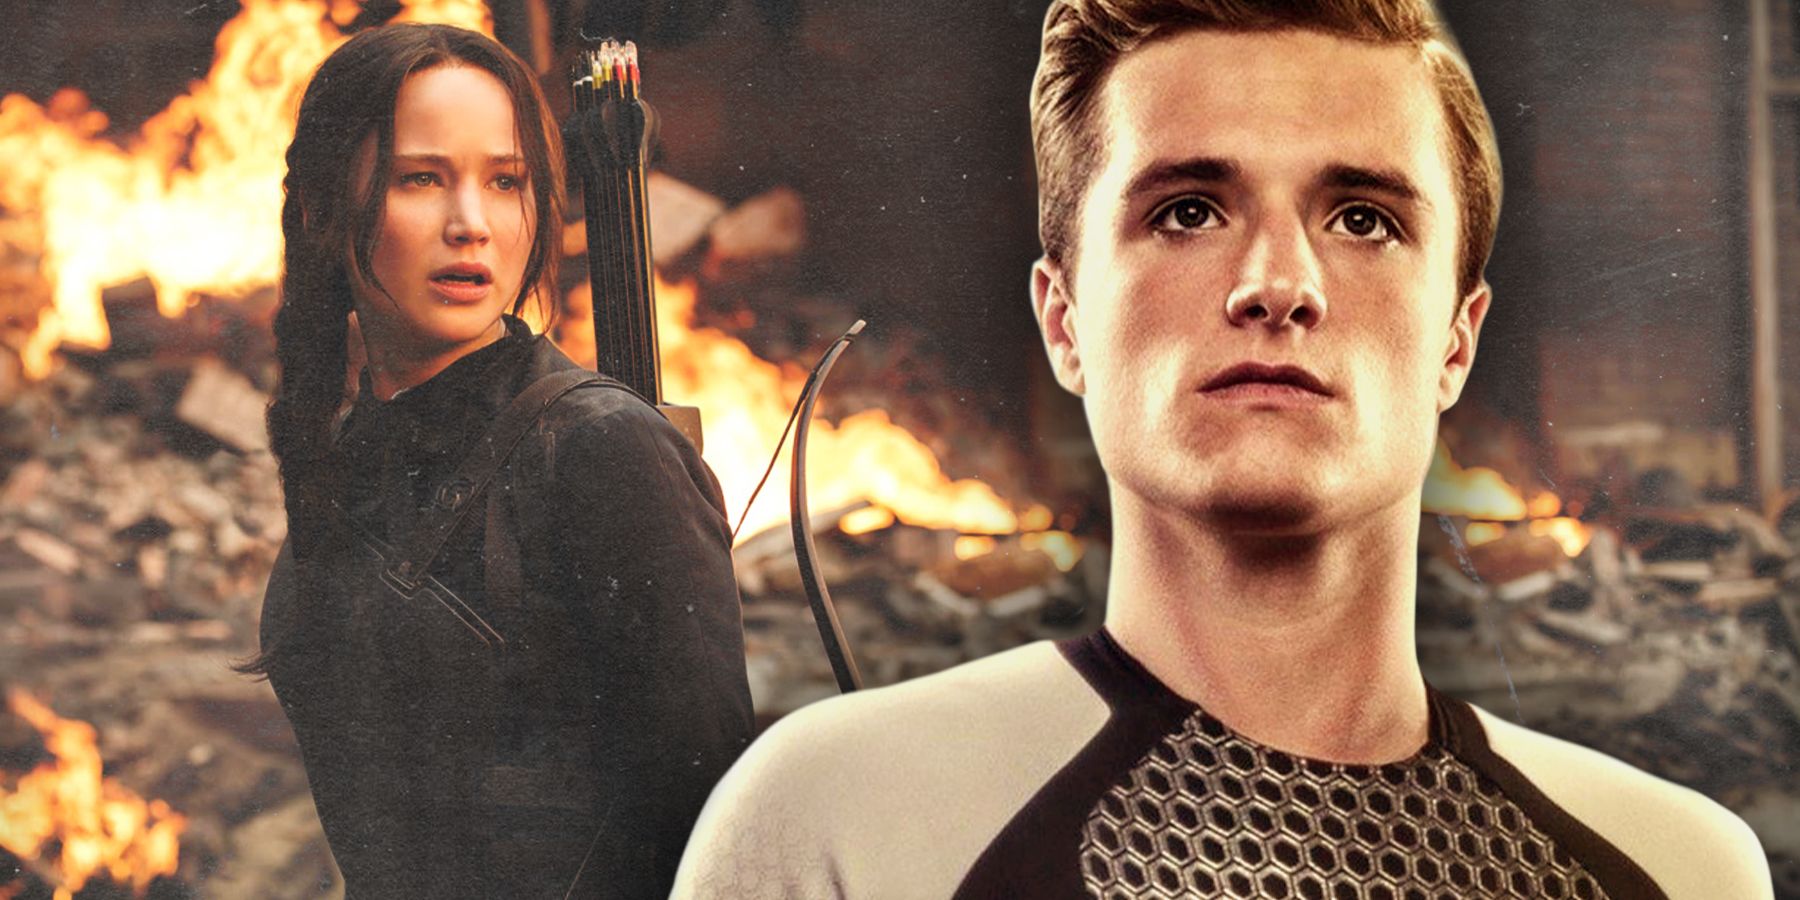 The Games Begin'  Hunger Games 